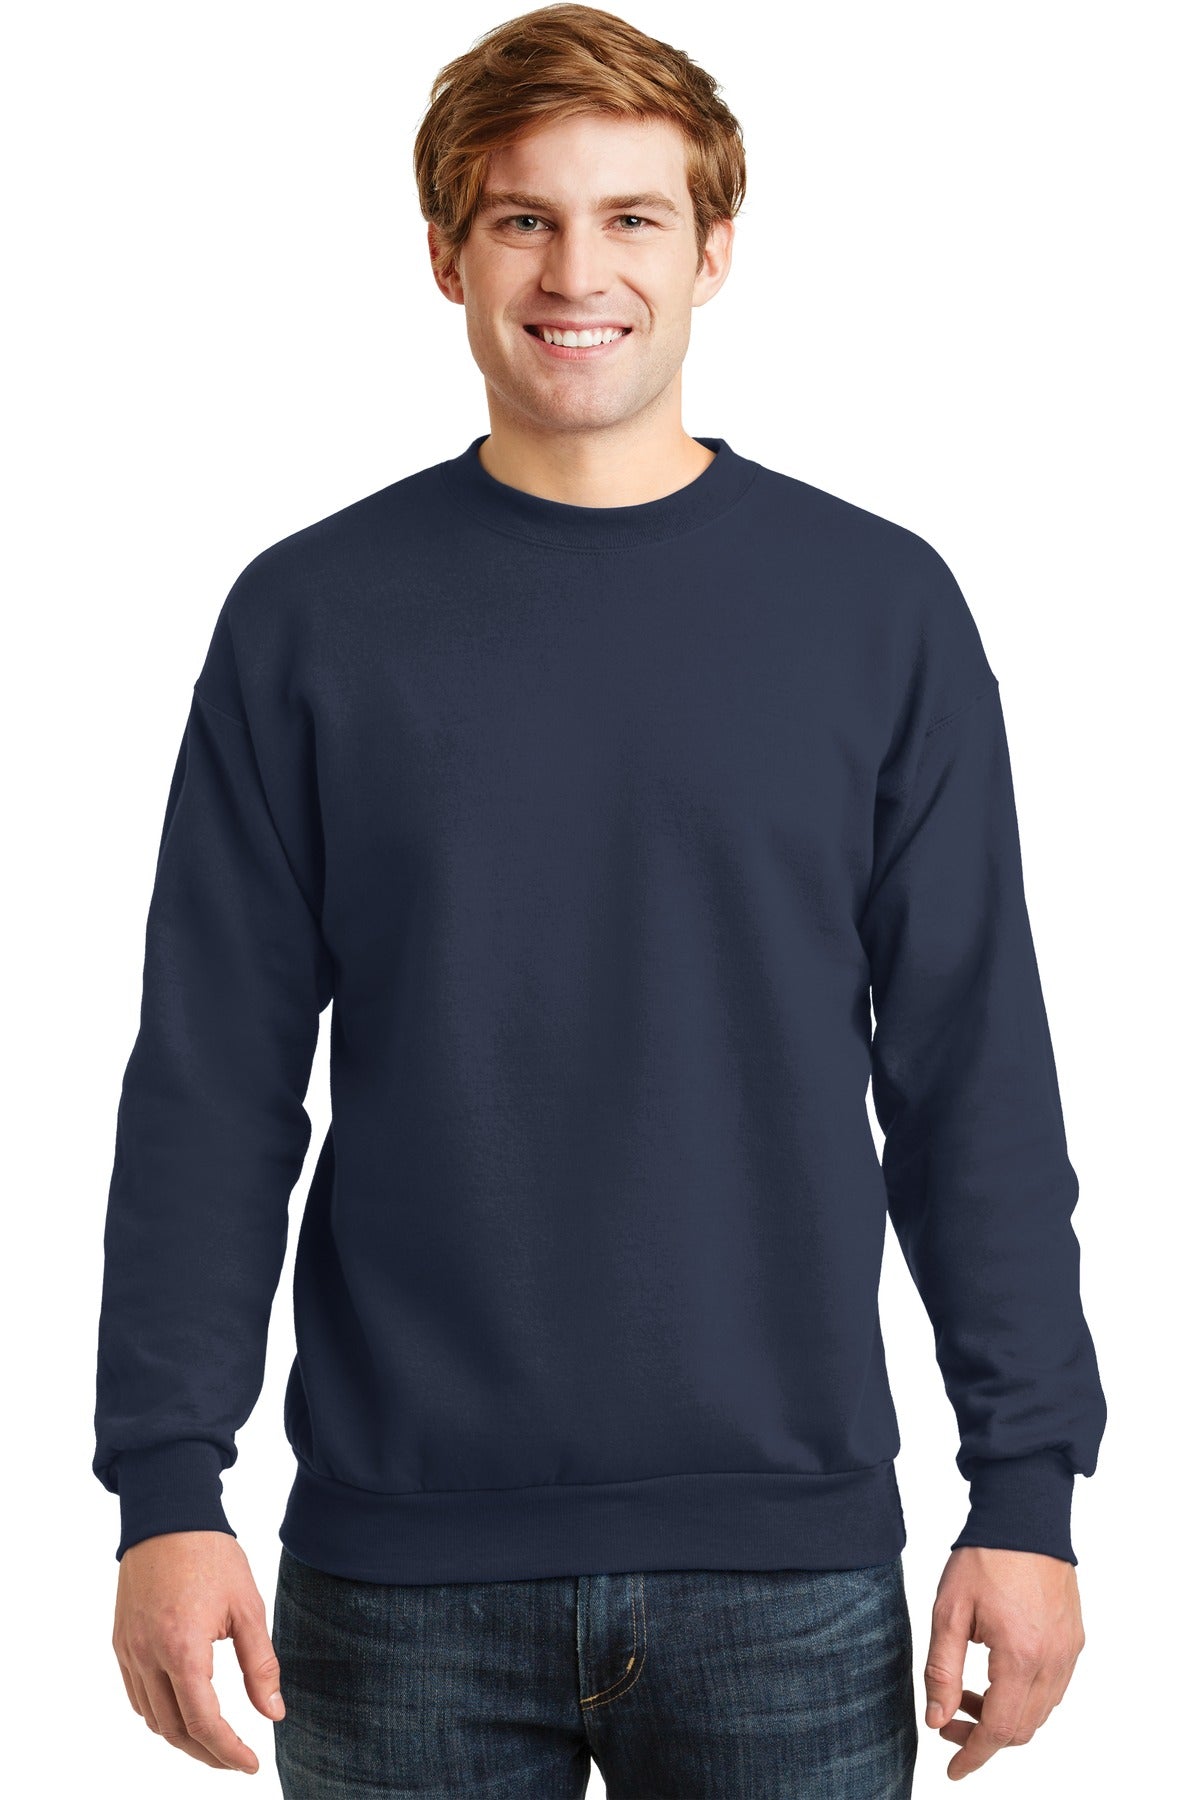 Sweatshirts/Fleece Navy Hanes